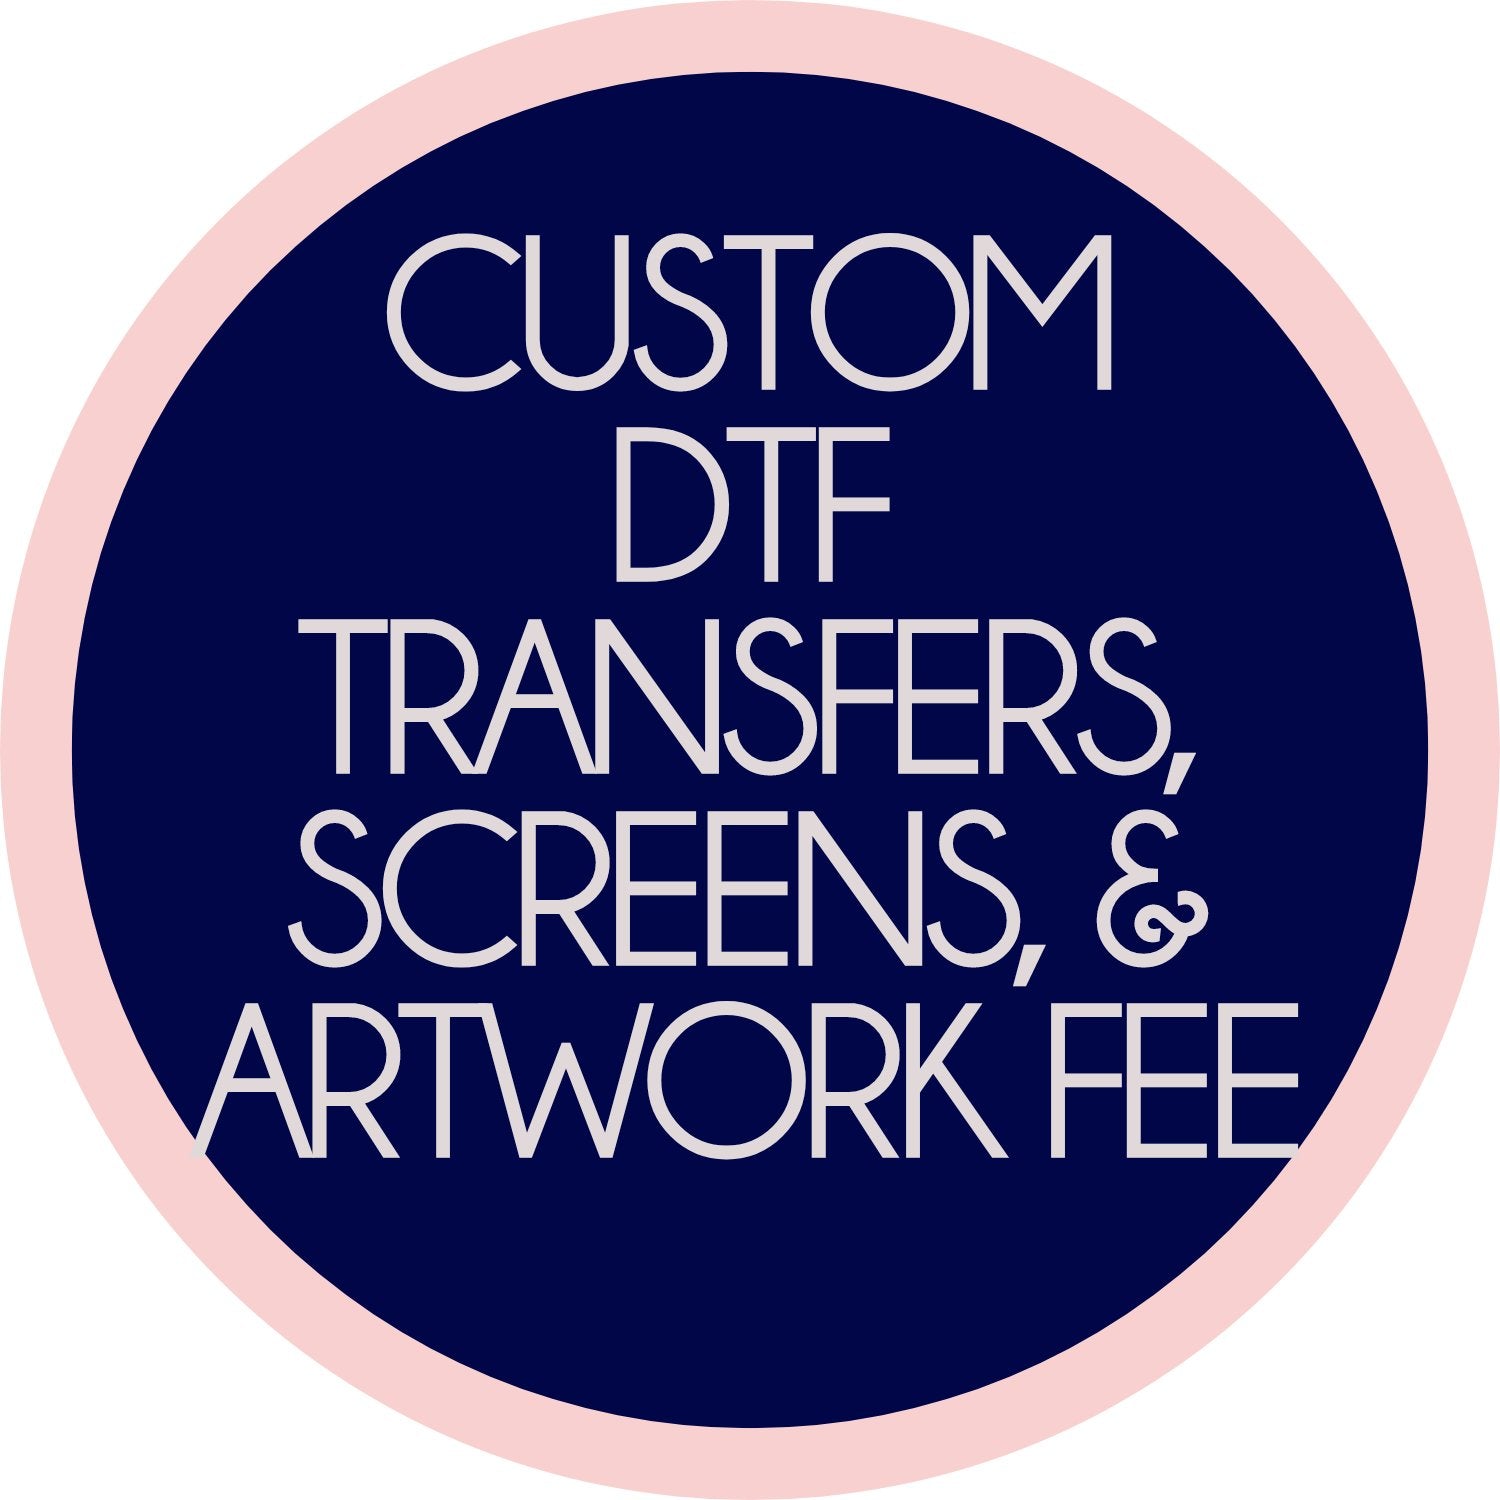 Custom DTF Transfers, Screen Prints, and Artwork Fee